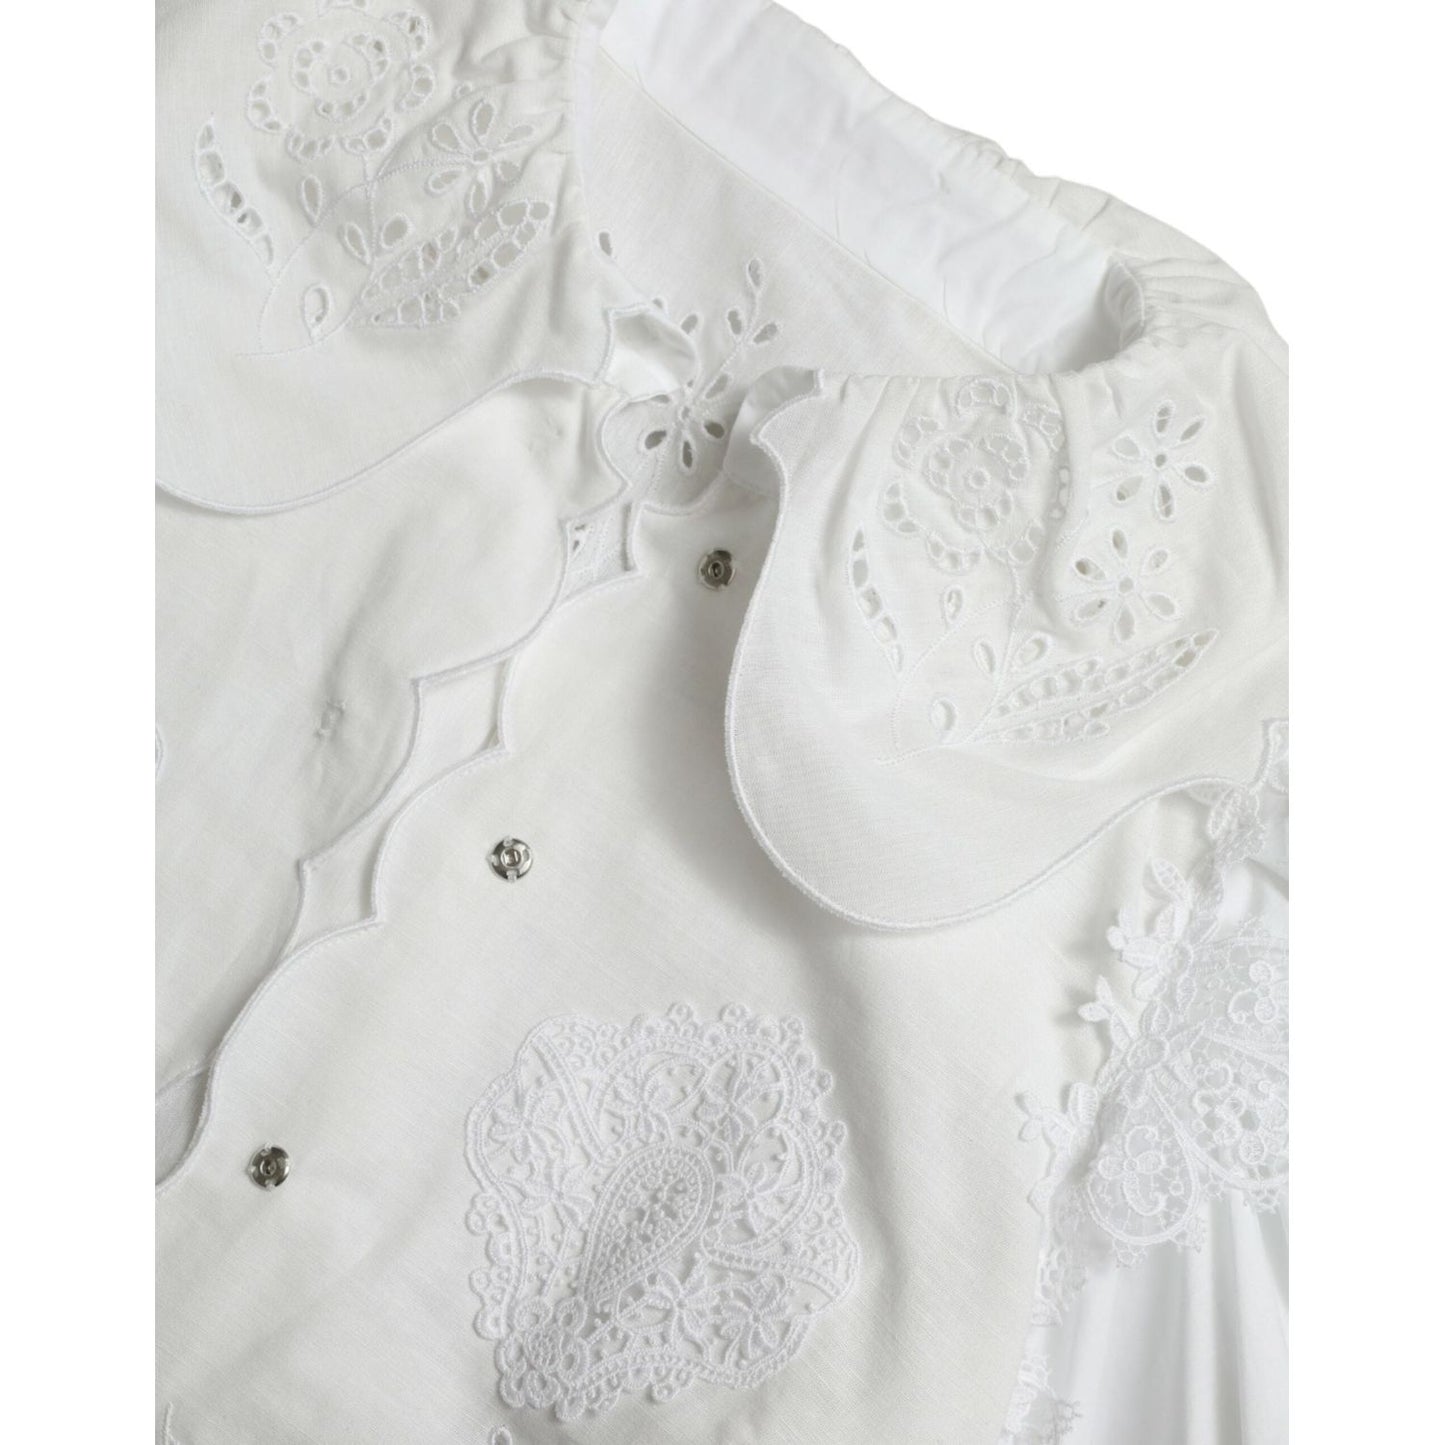 Dolce & Gabbana Elegant White Lace Trim Blouse Top white-cotton-lace-trim-collared-blouse-top